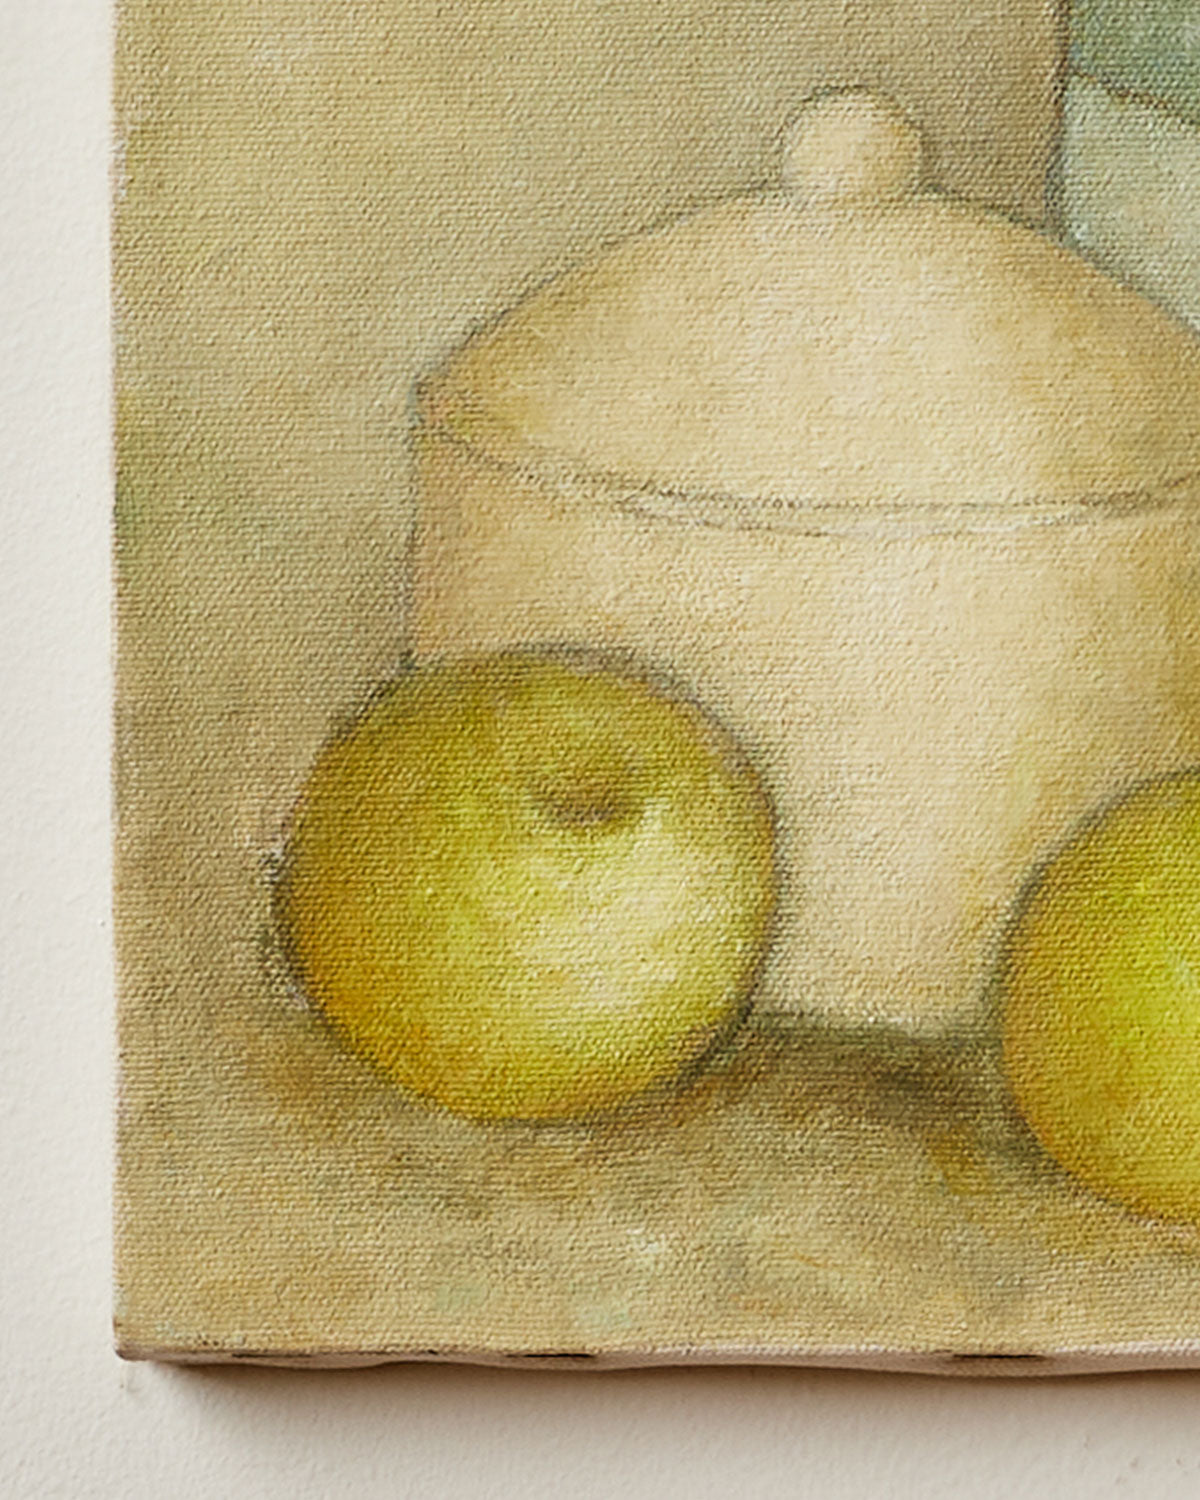 Apples, Teapot and Sugar Bowl Still Life